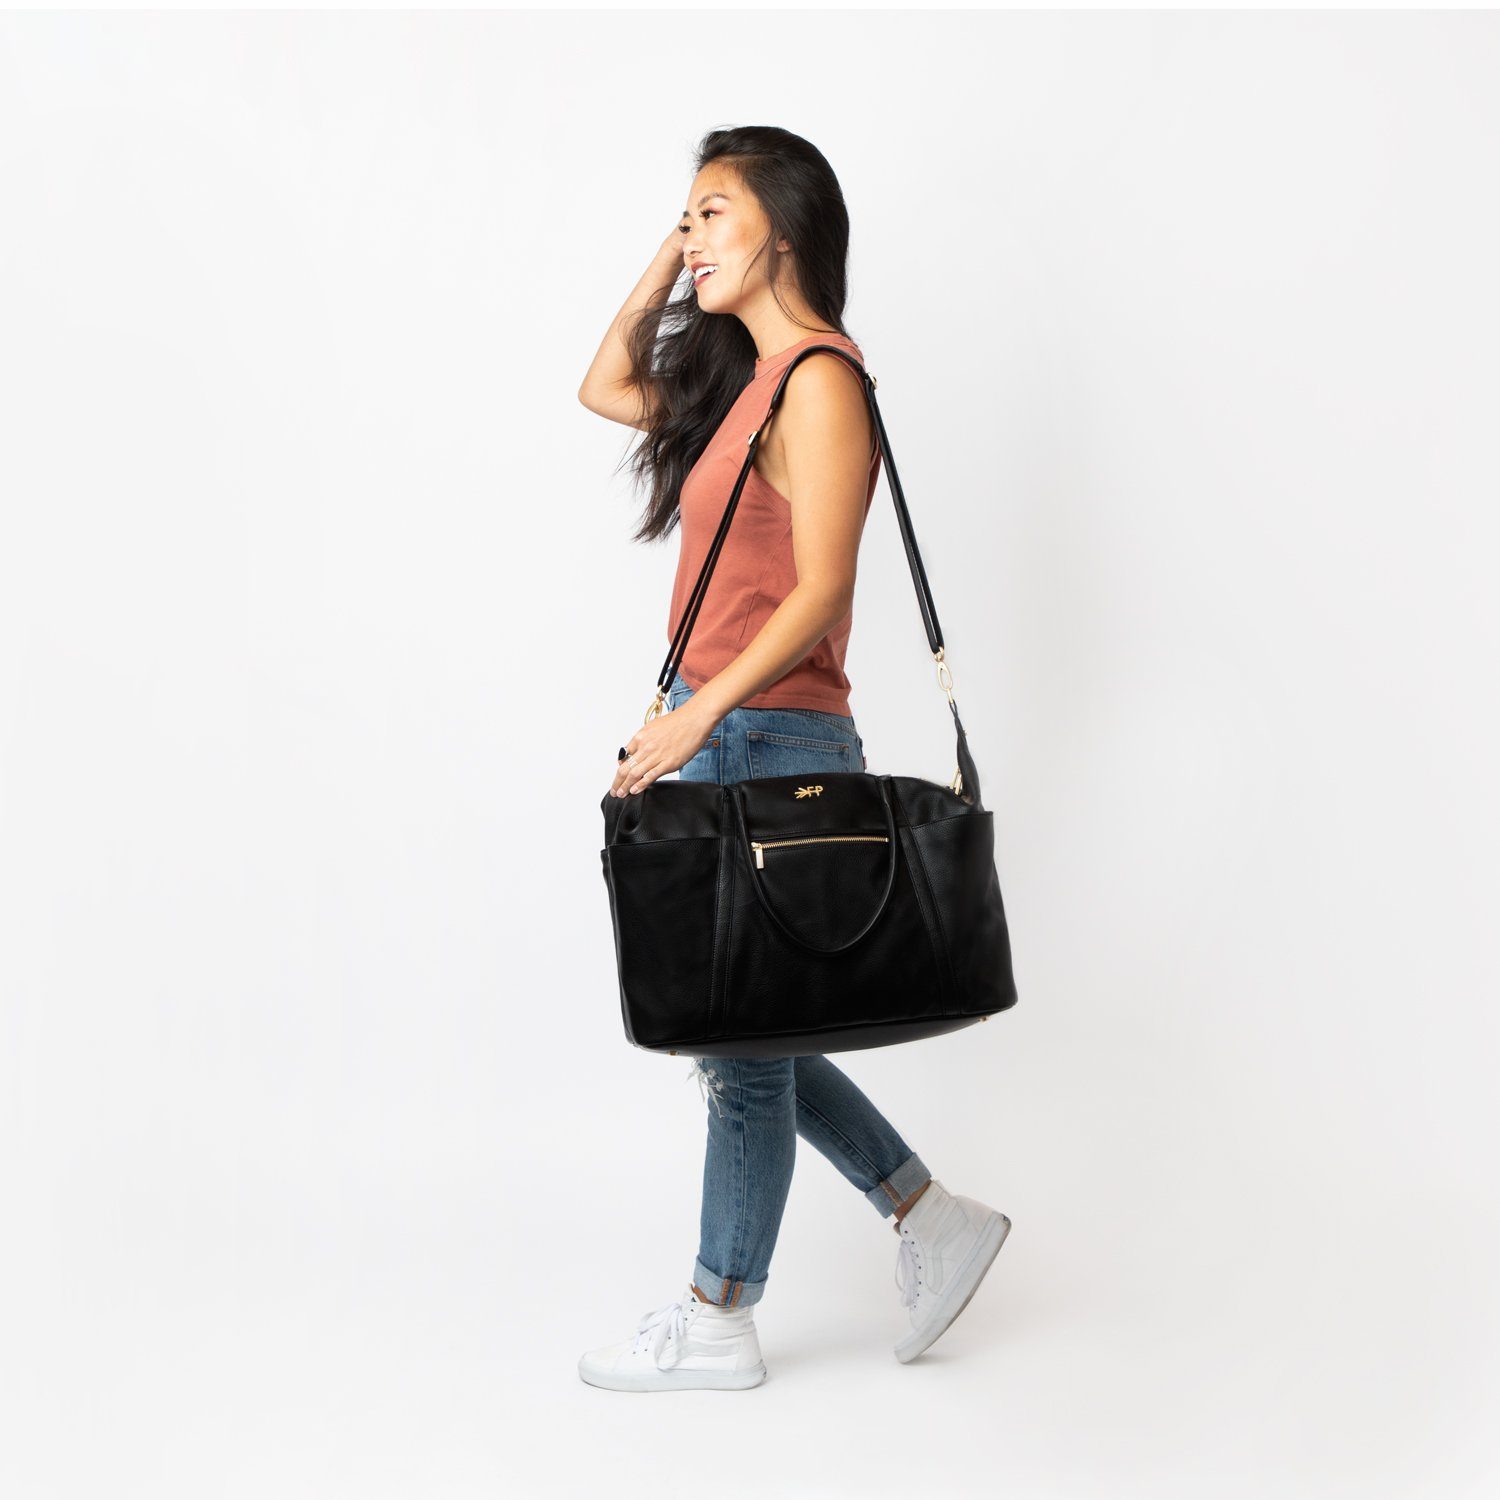 Black Quilted Weekender Travel Bag - Groovy Girl Gifts